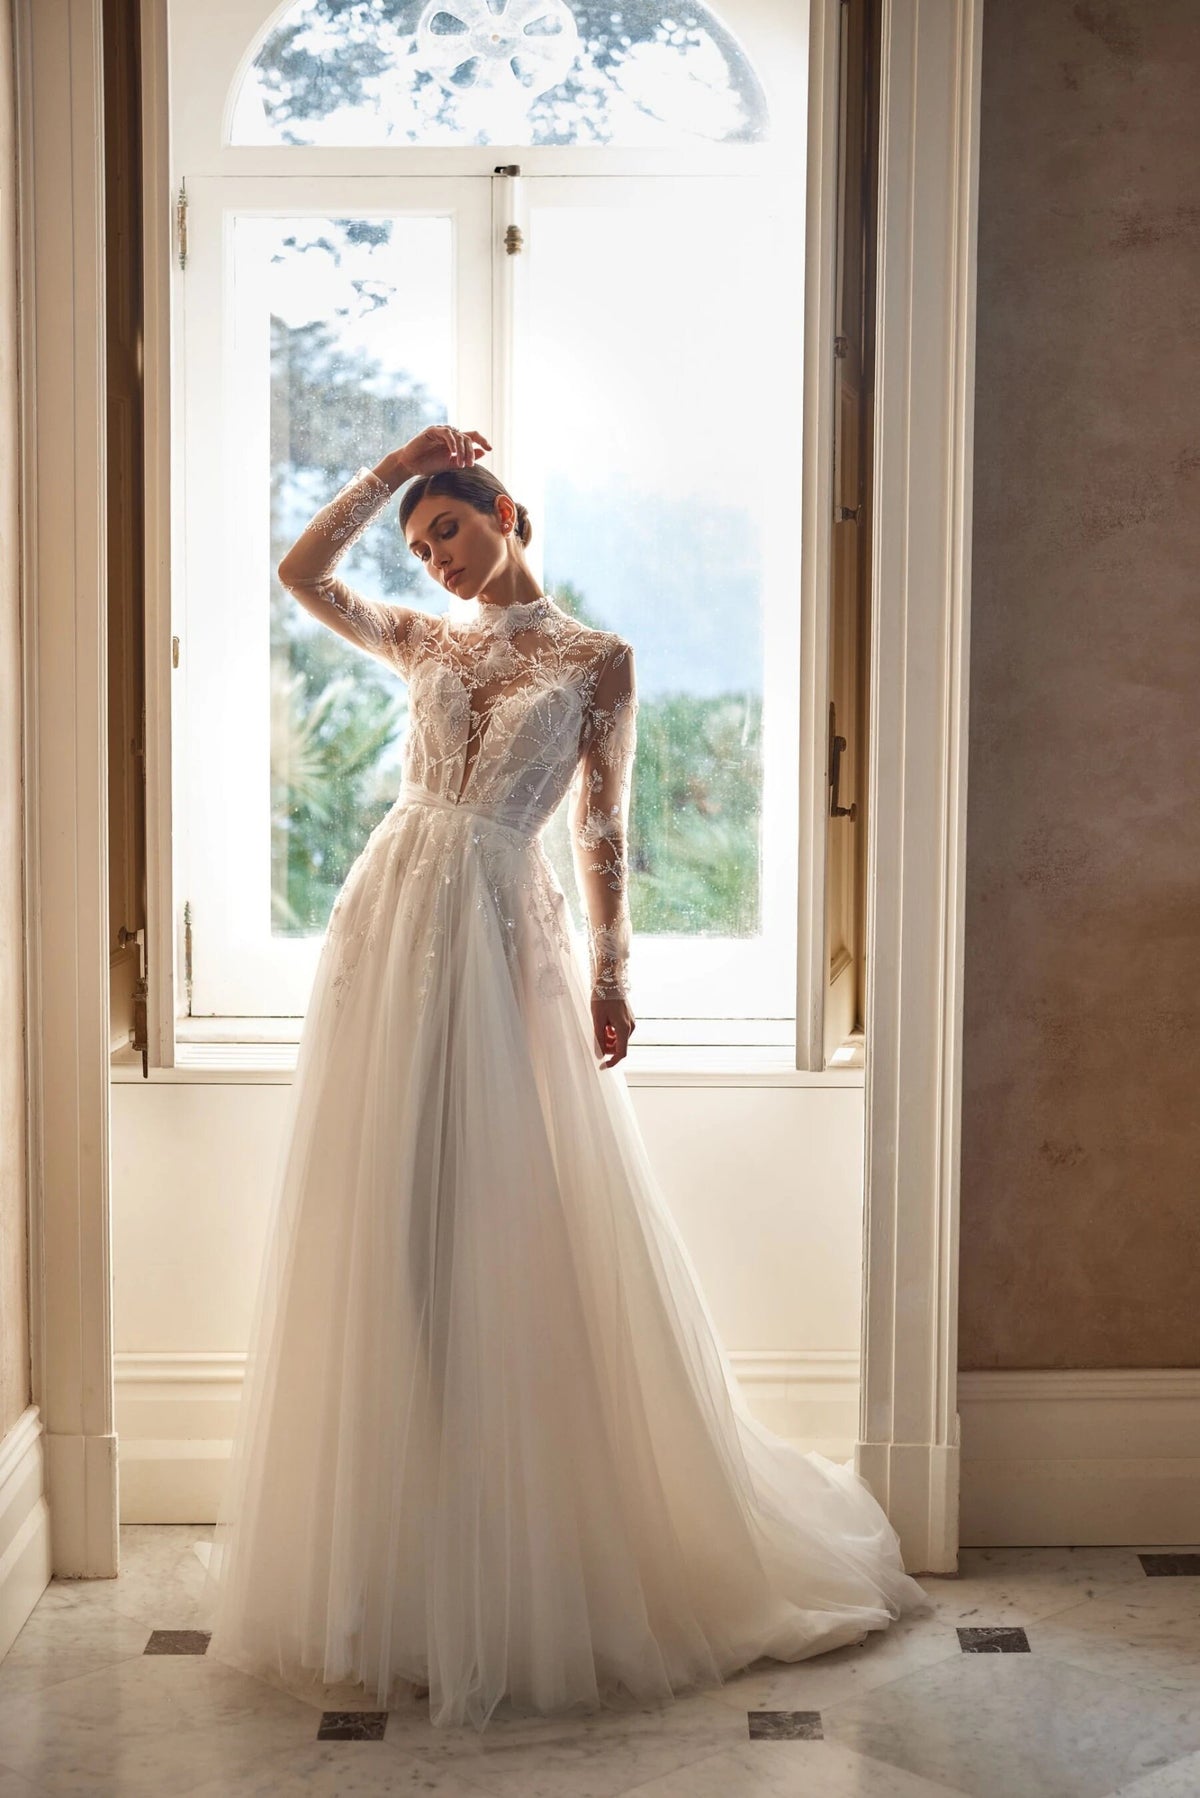 Stunning Aline Long Illusion Sleeves Embroidered Flowers Semi Transparent Bodice Deep V Neckline High Collar Wedding Dress Bridal Gown